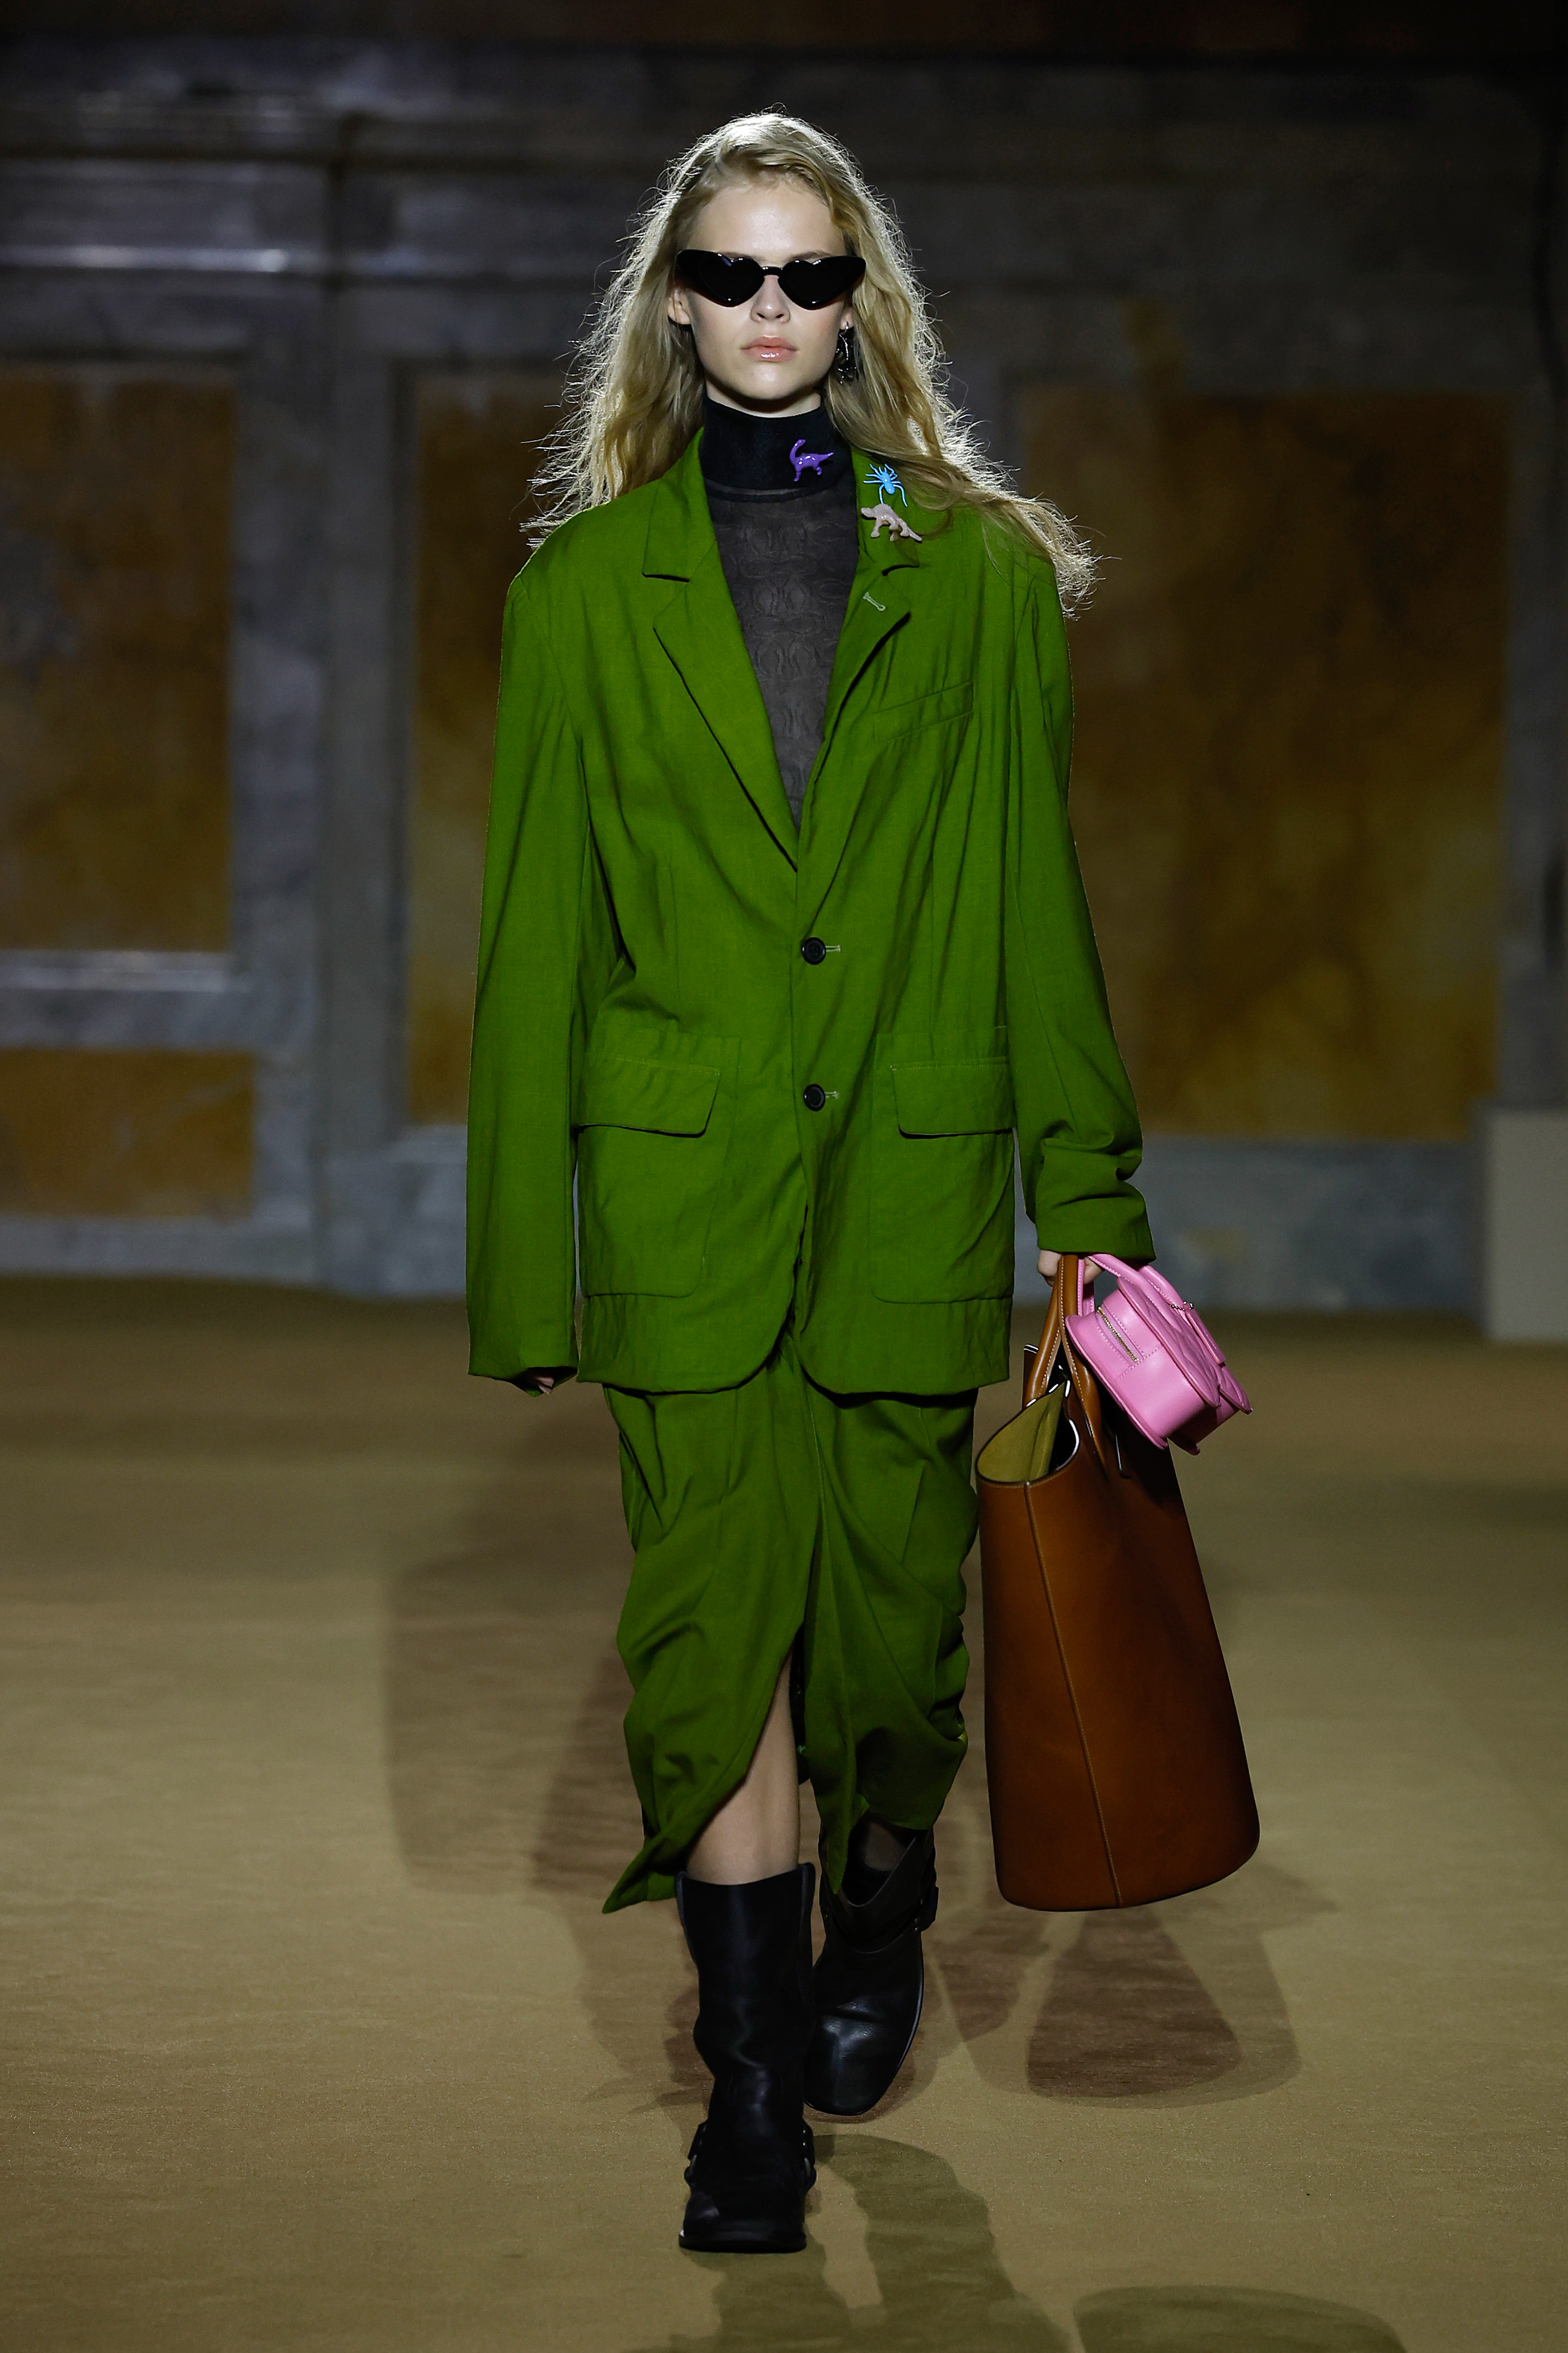 Runway Handbag Green/Black Pyramid - Women's Bags